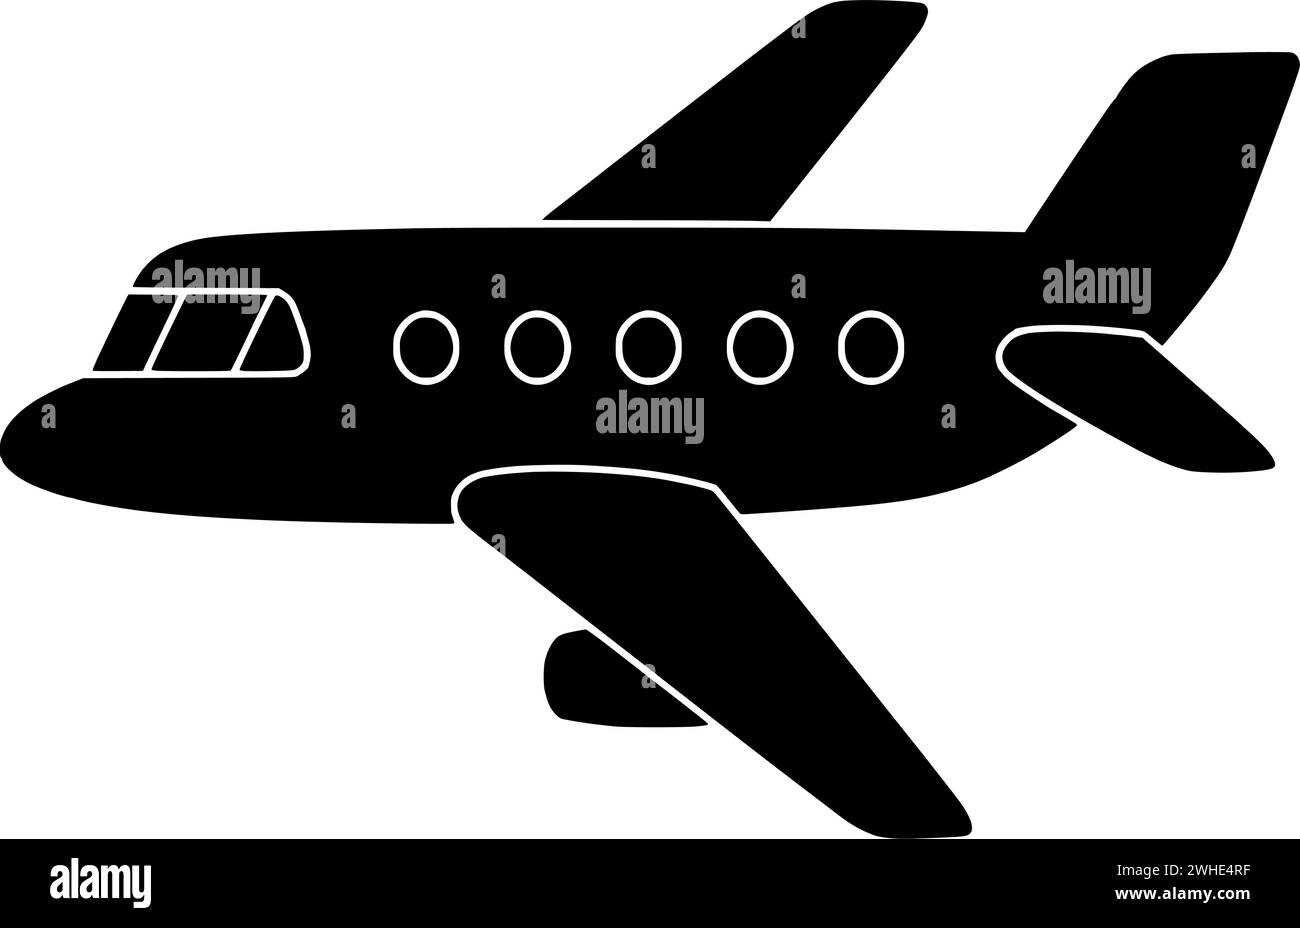 airplane illustration fly silhouette travel logo tourism icon plane outline sky aviation transport air aircraft flight business transportation jet shape trip airliner passenger Stock Vector